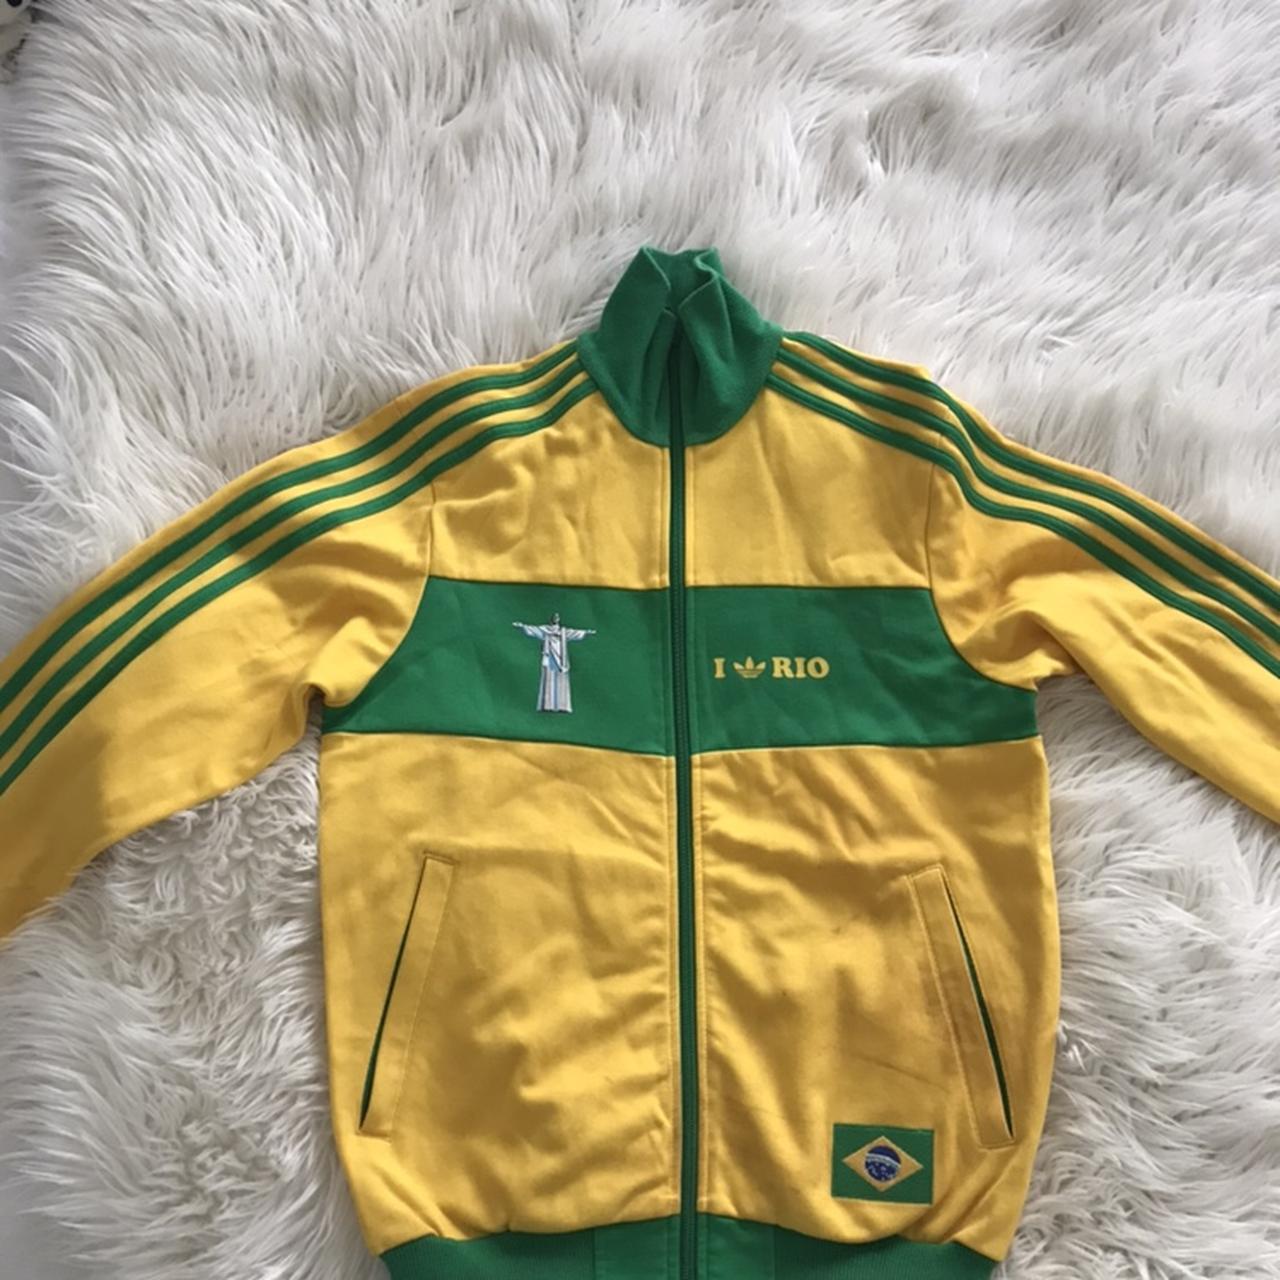 Vintage Brazil Rio De Janeiro Adidas zip up jacket - Depop